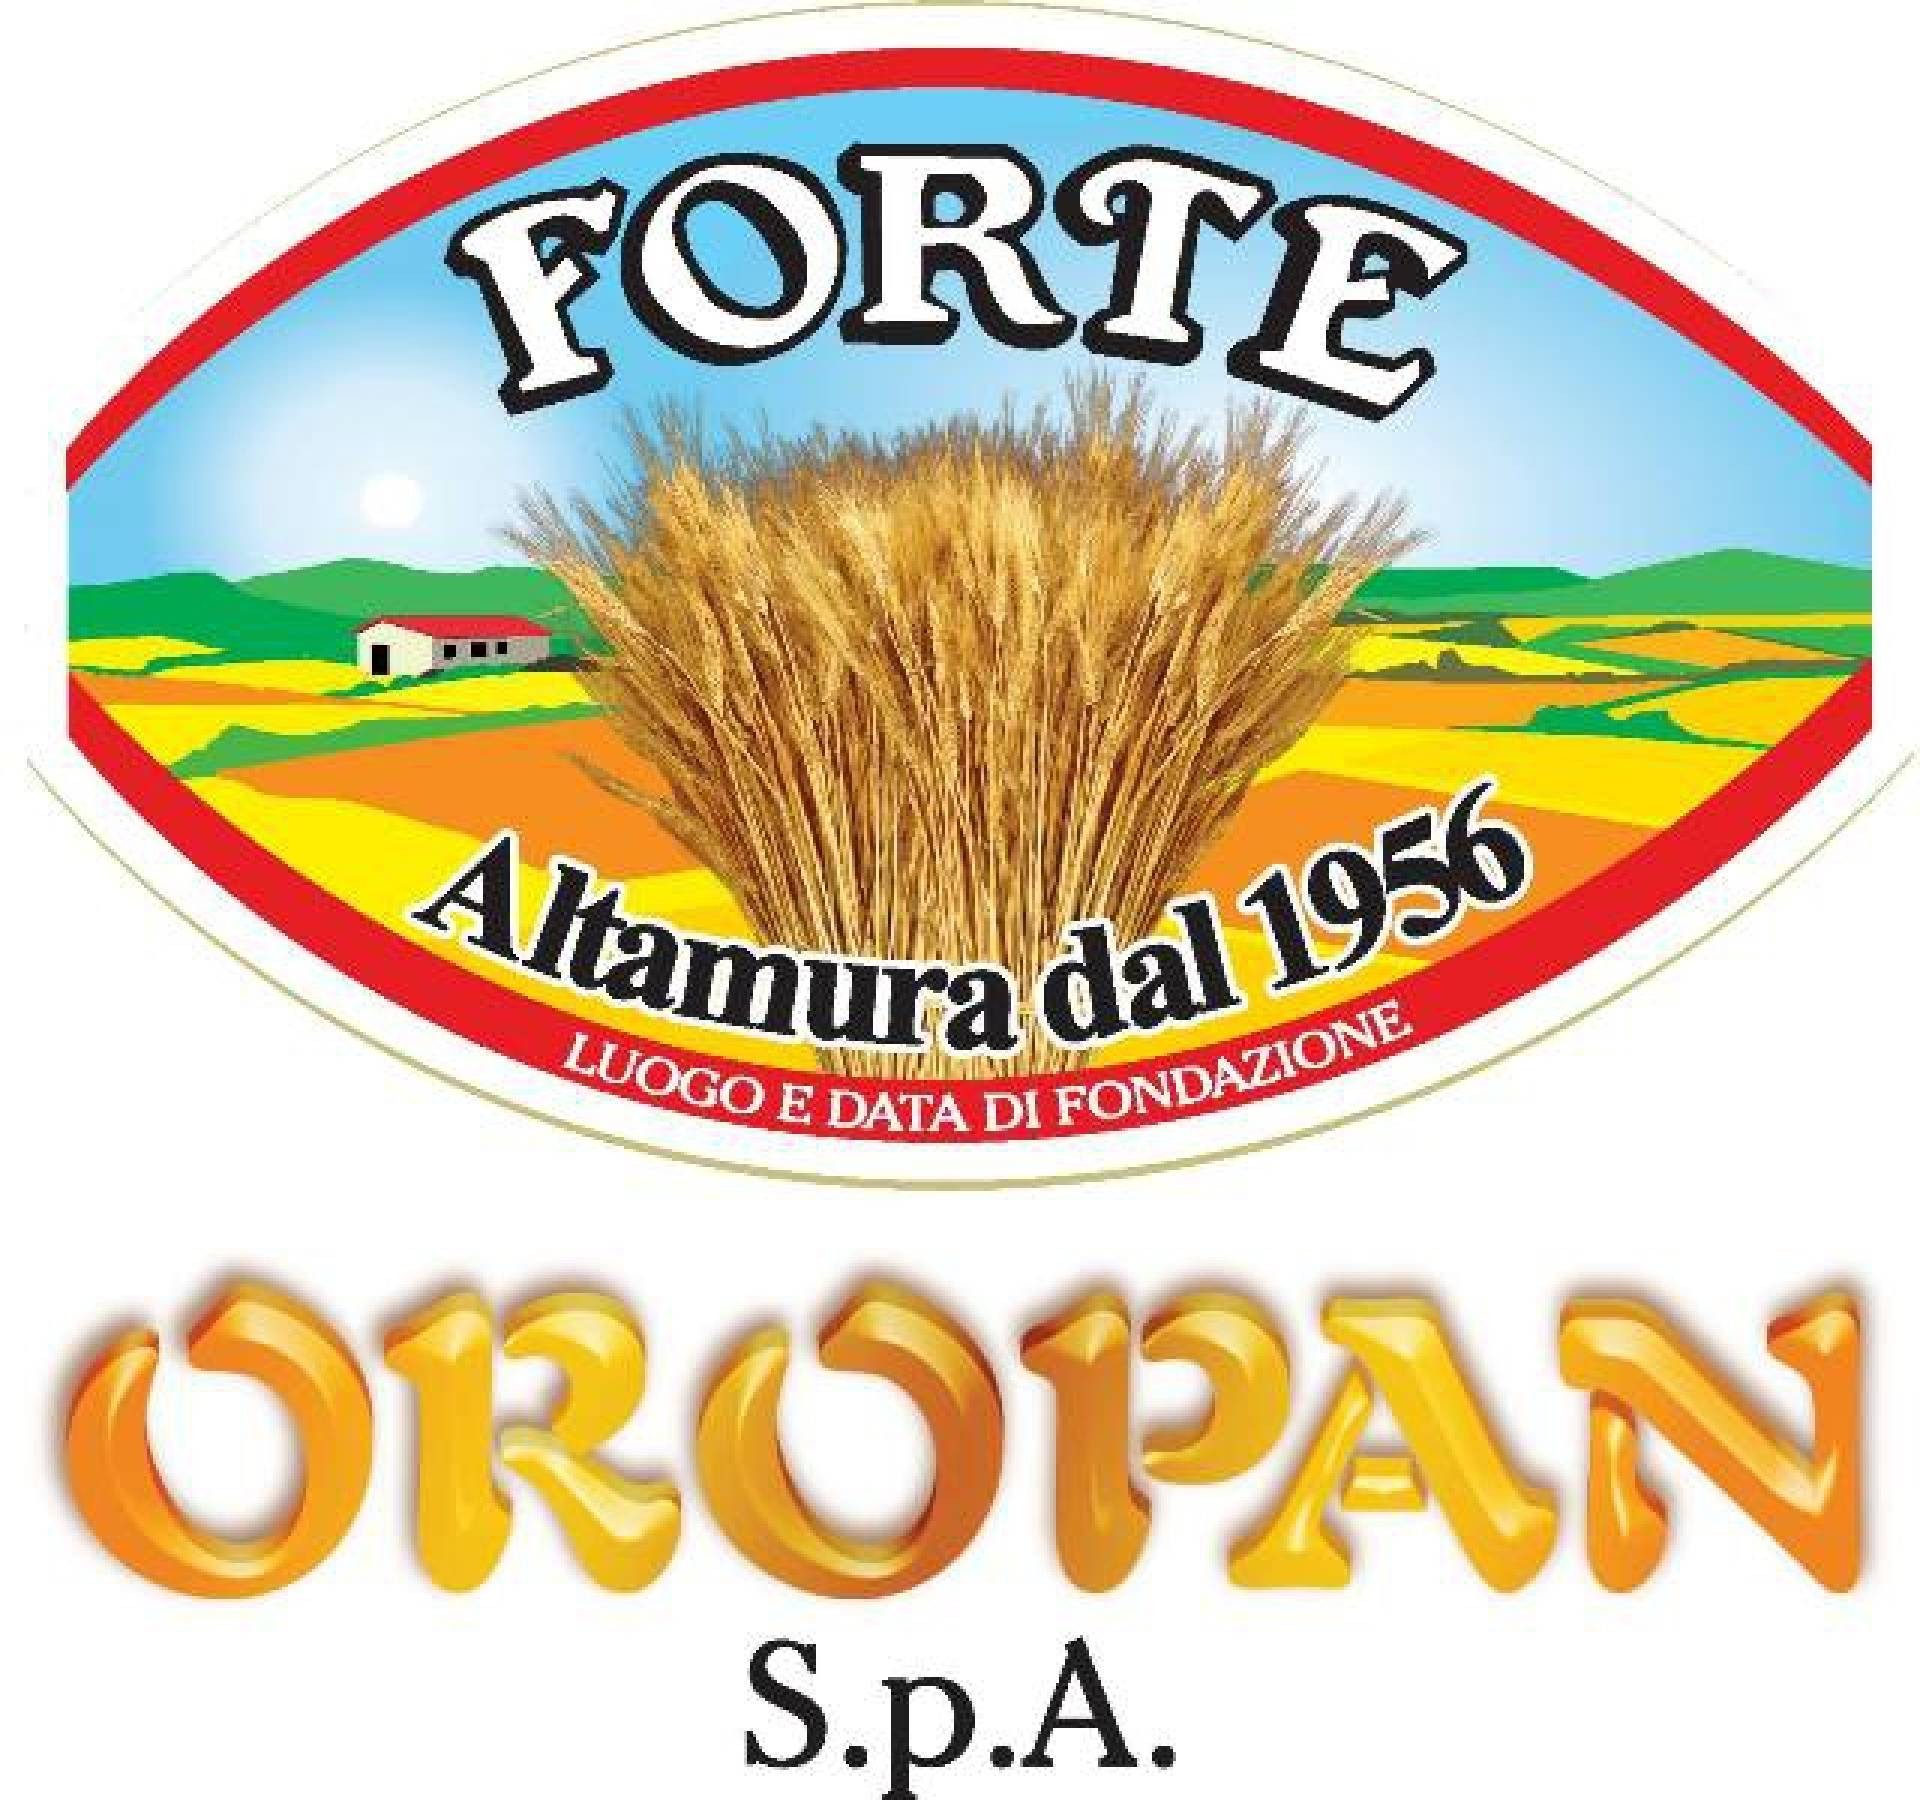 Forte Oropan